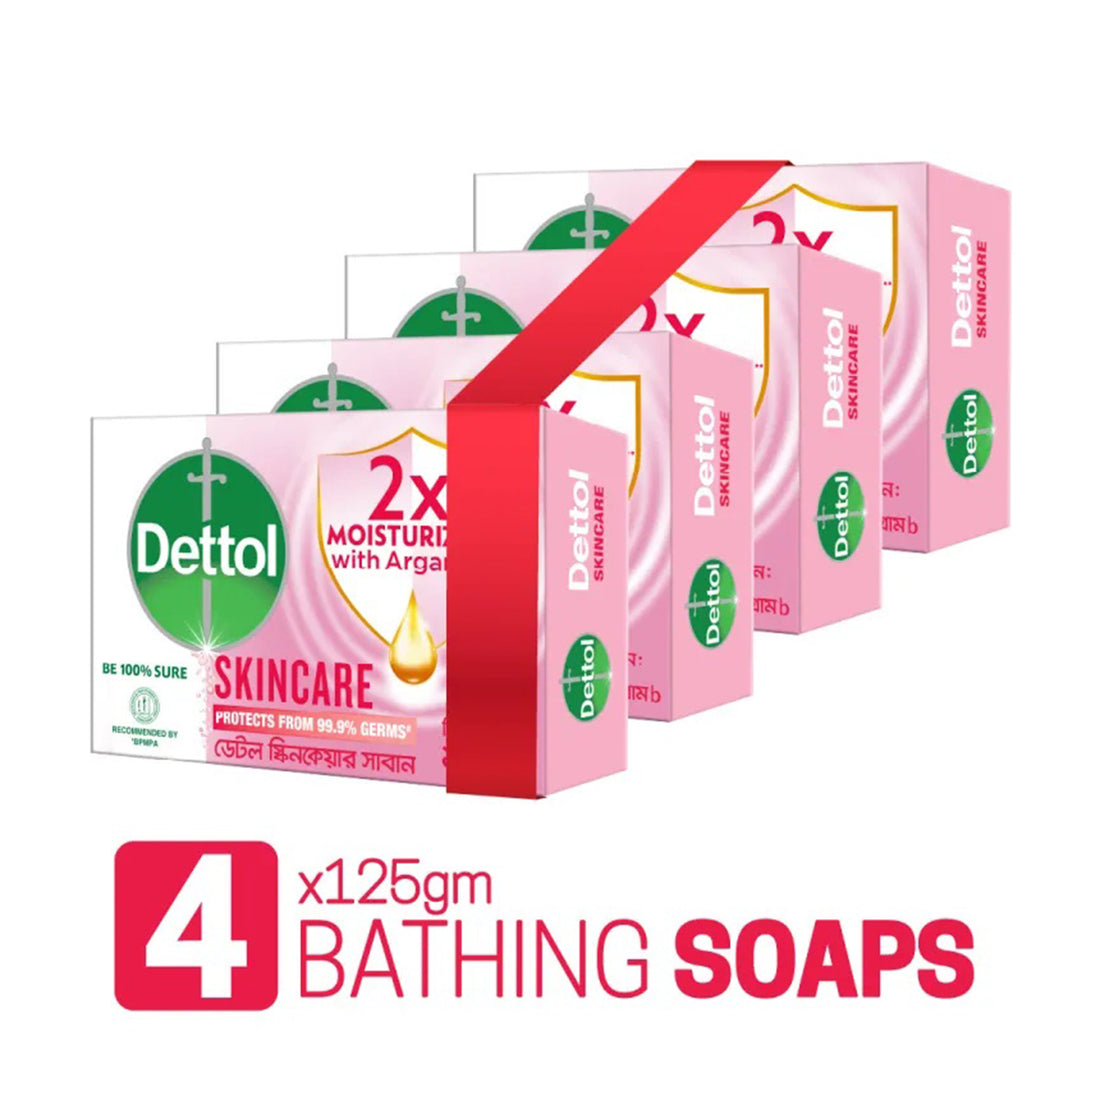 Dettol Soap Skincare Quad Pack (125gm X 4), 2X Moisturizers with Argan Oil Bathing Bar